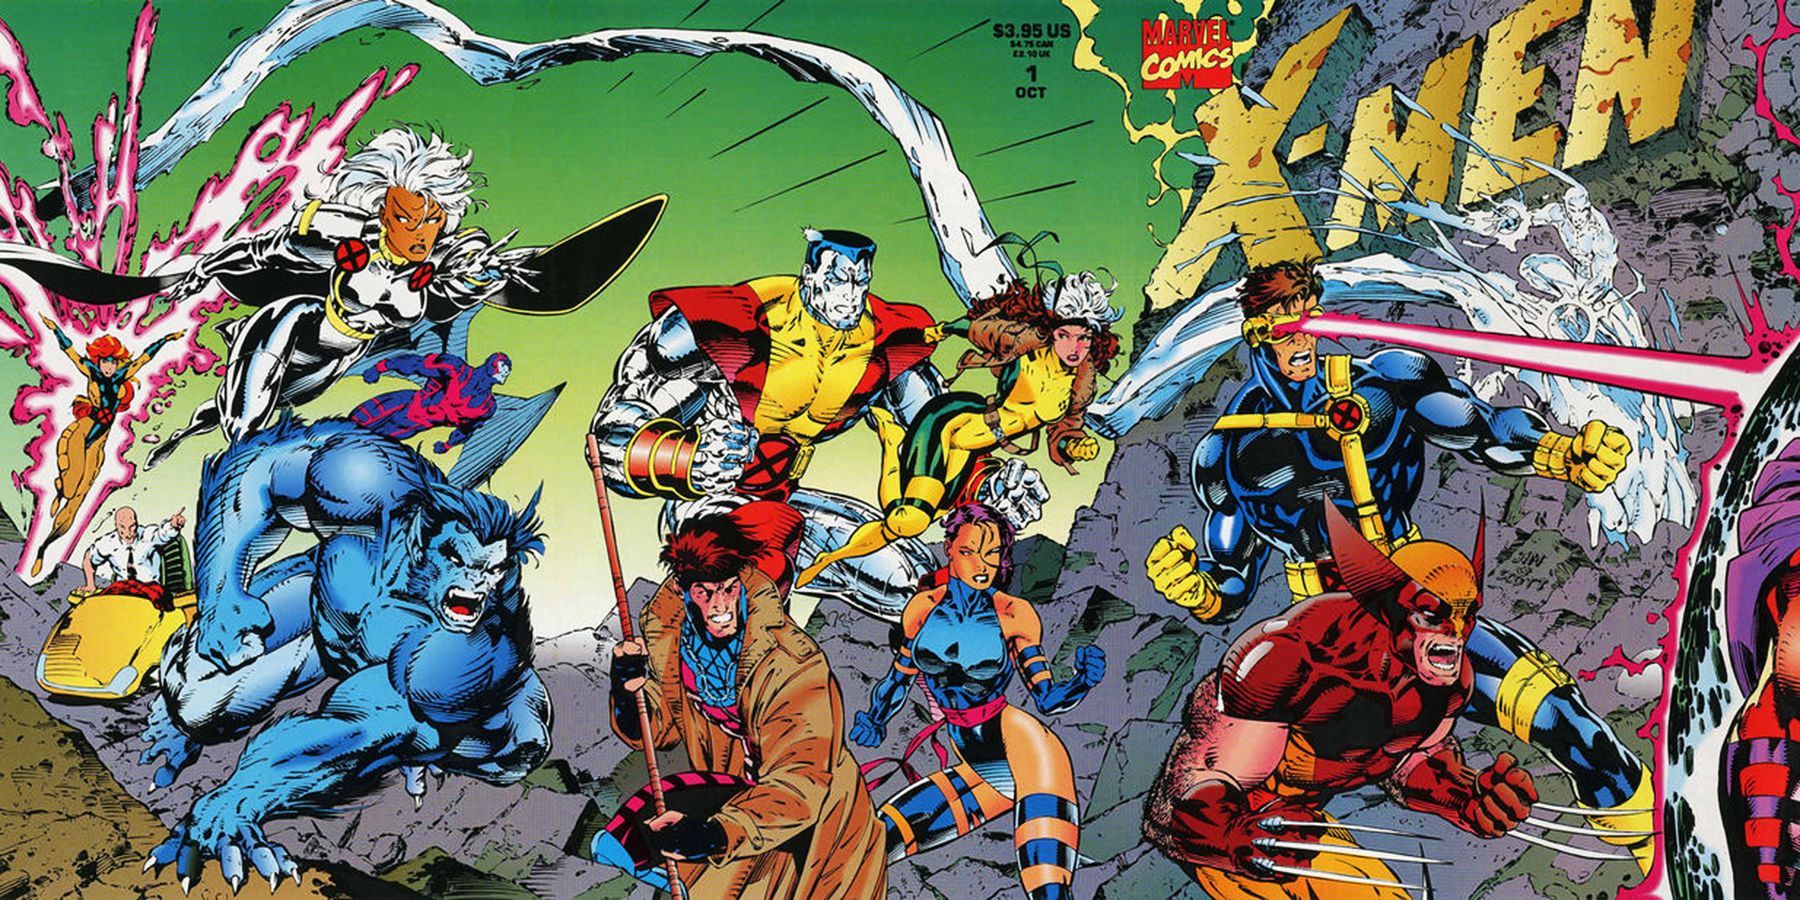 Marvel Comics' X-Men #1 featuring Jean Grey, Storm, Beast, Gambit, Colossus, Rogue, Psylocke, Cyclops, Iceman, and Wolverine